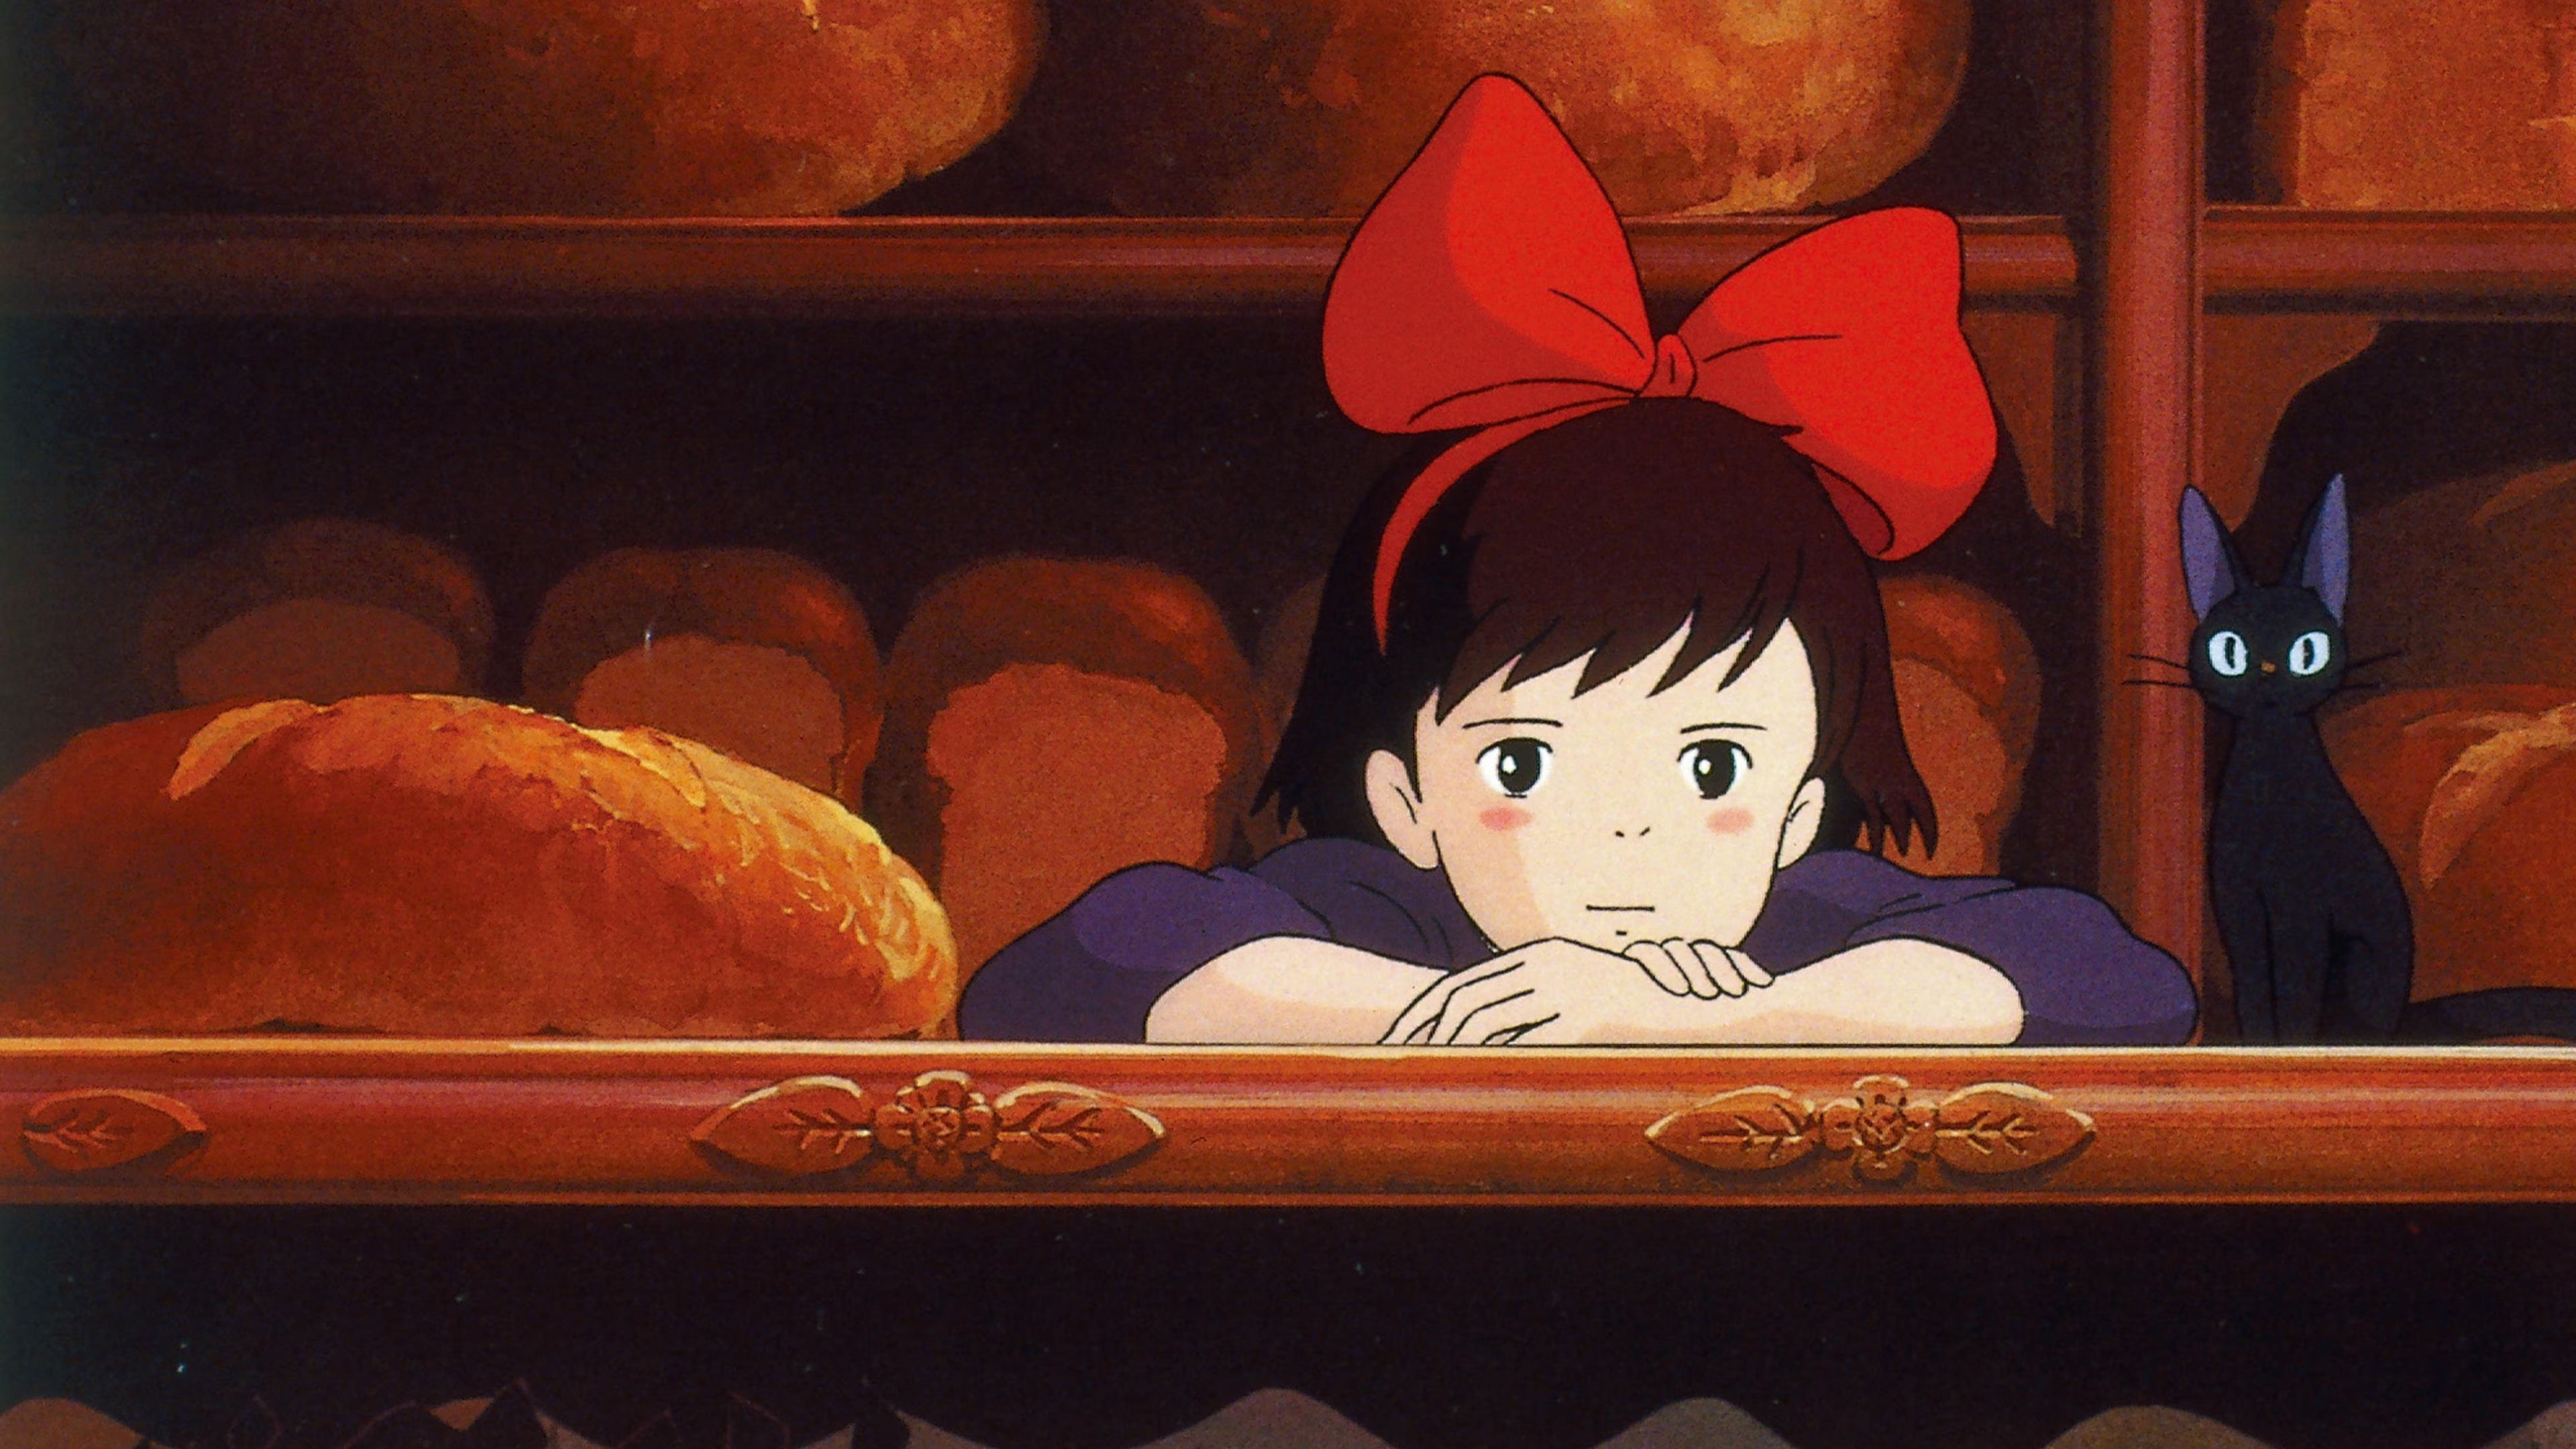 Kiki's Delivery Service from Studio Ghibli